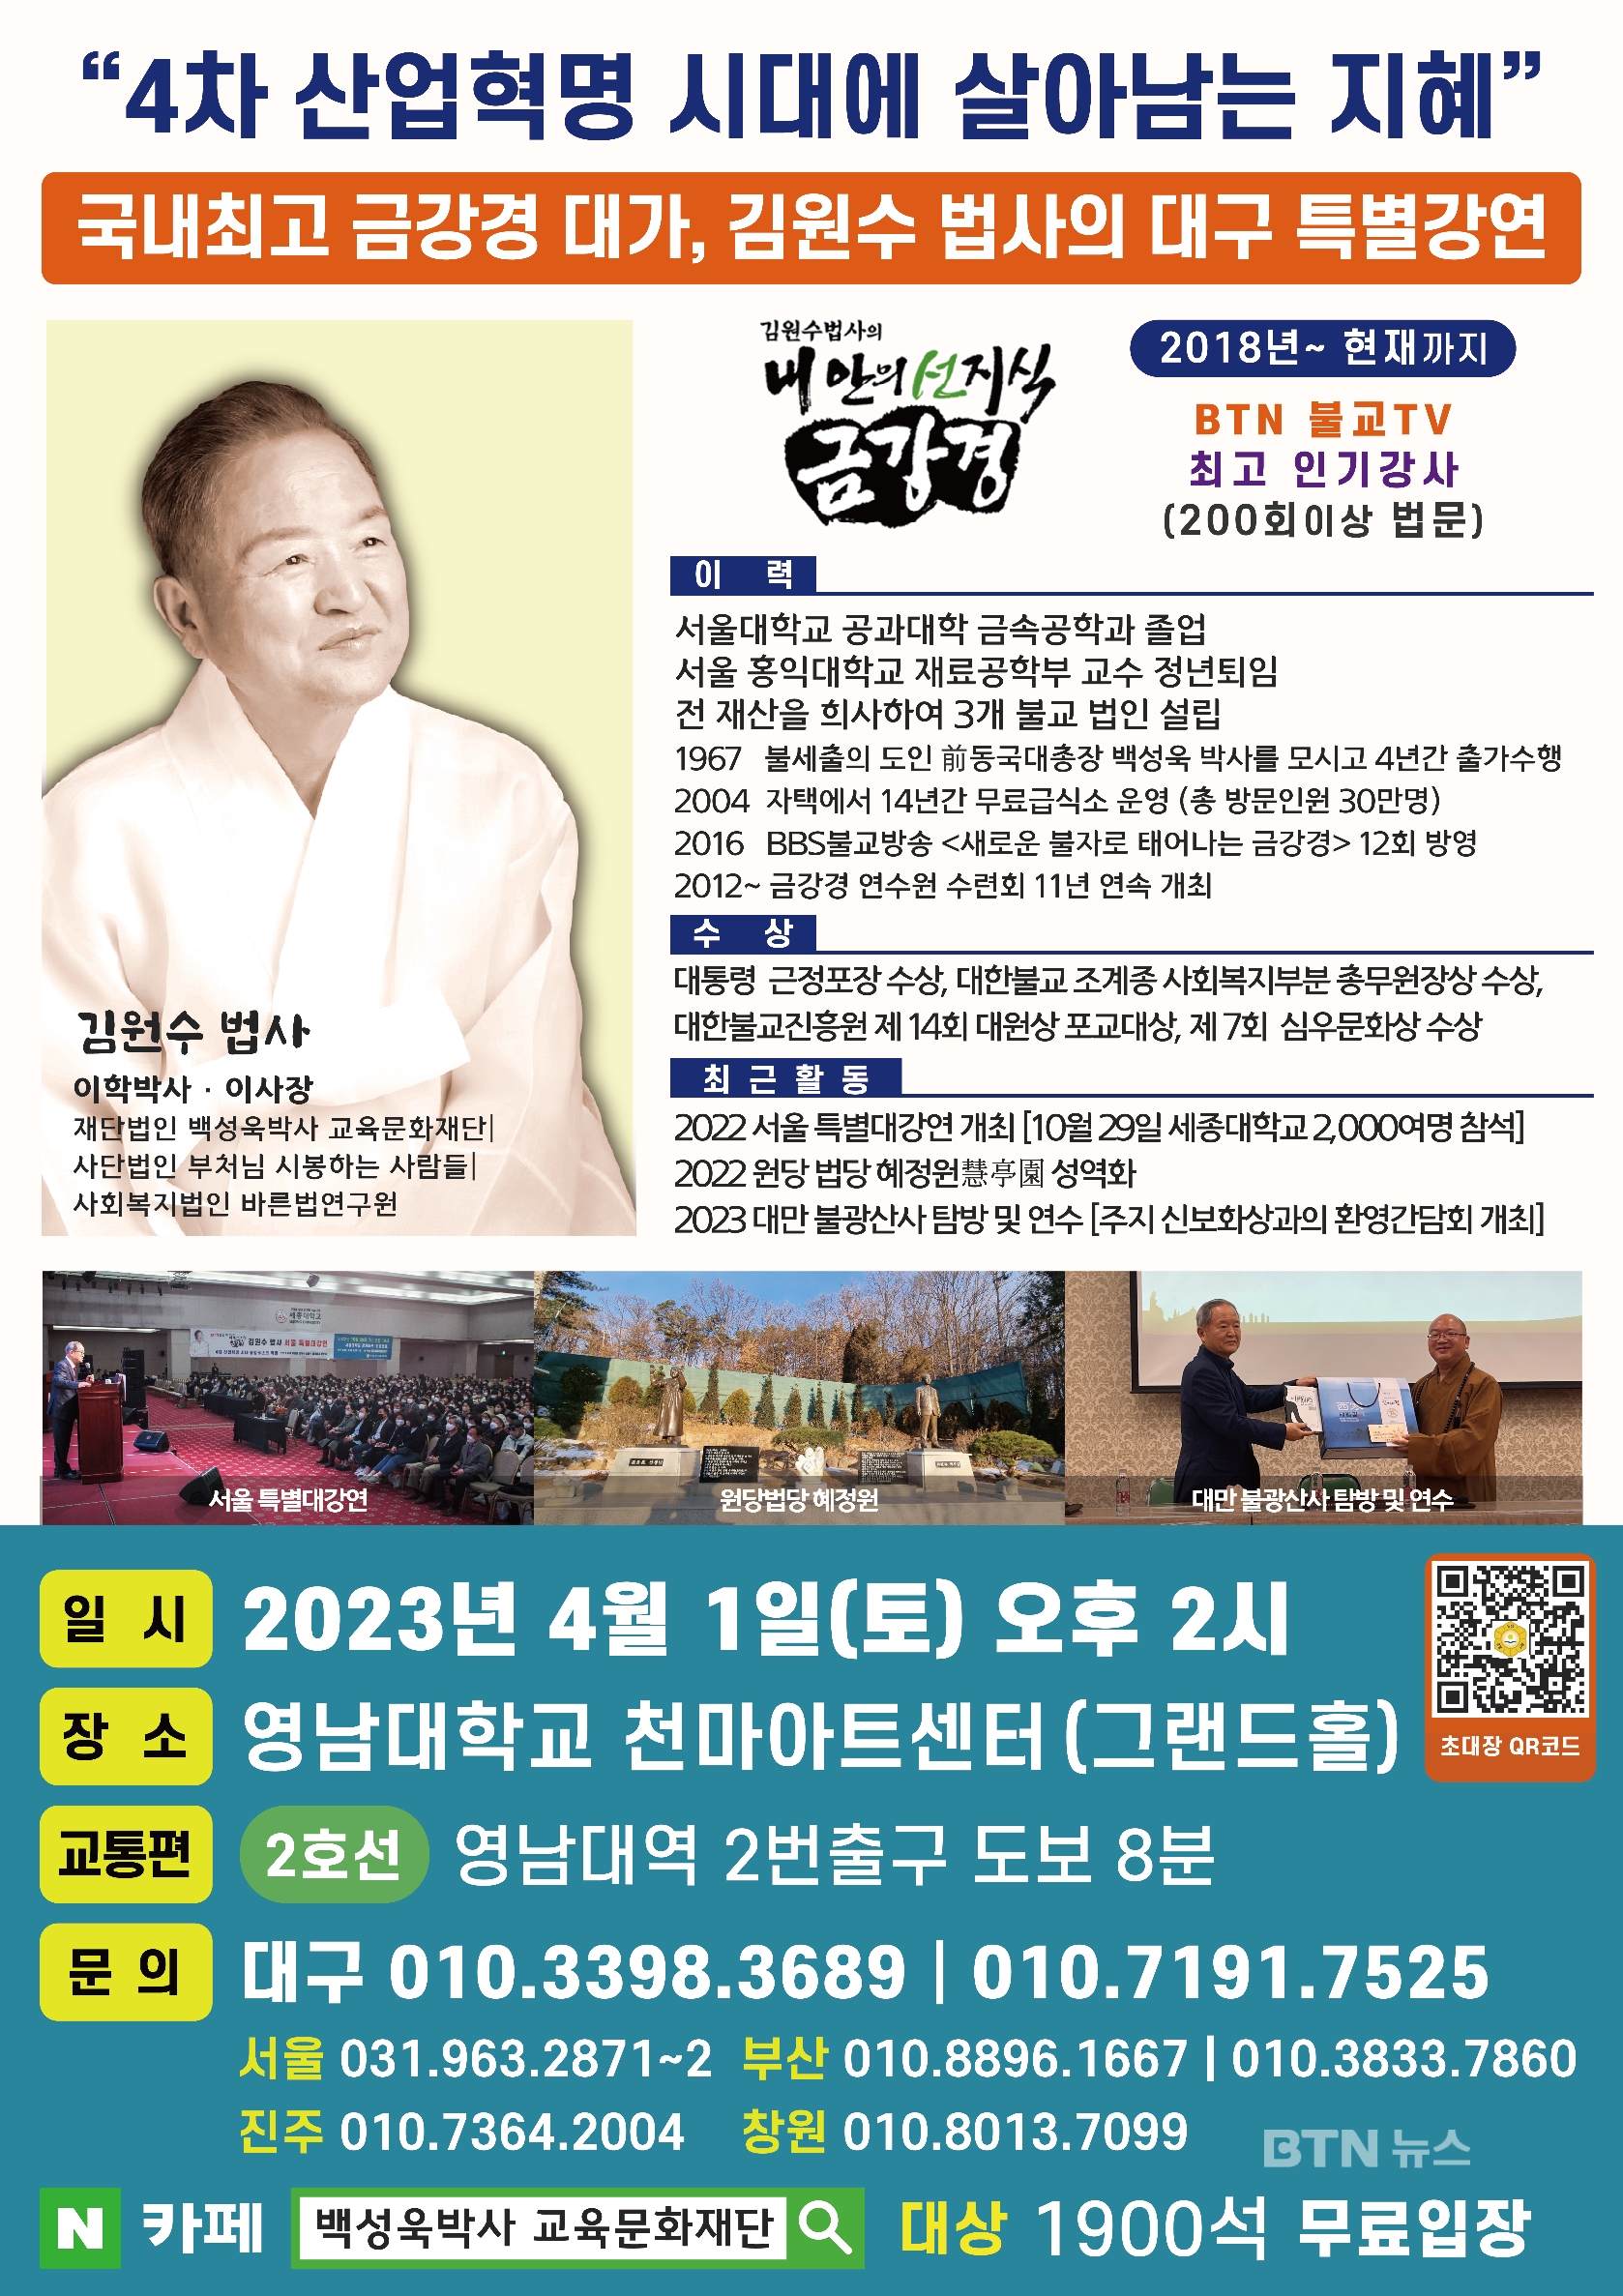 BTN '내 안의 선지식 금강경' 김원수 법사, 대구 특강 개최